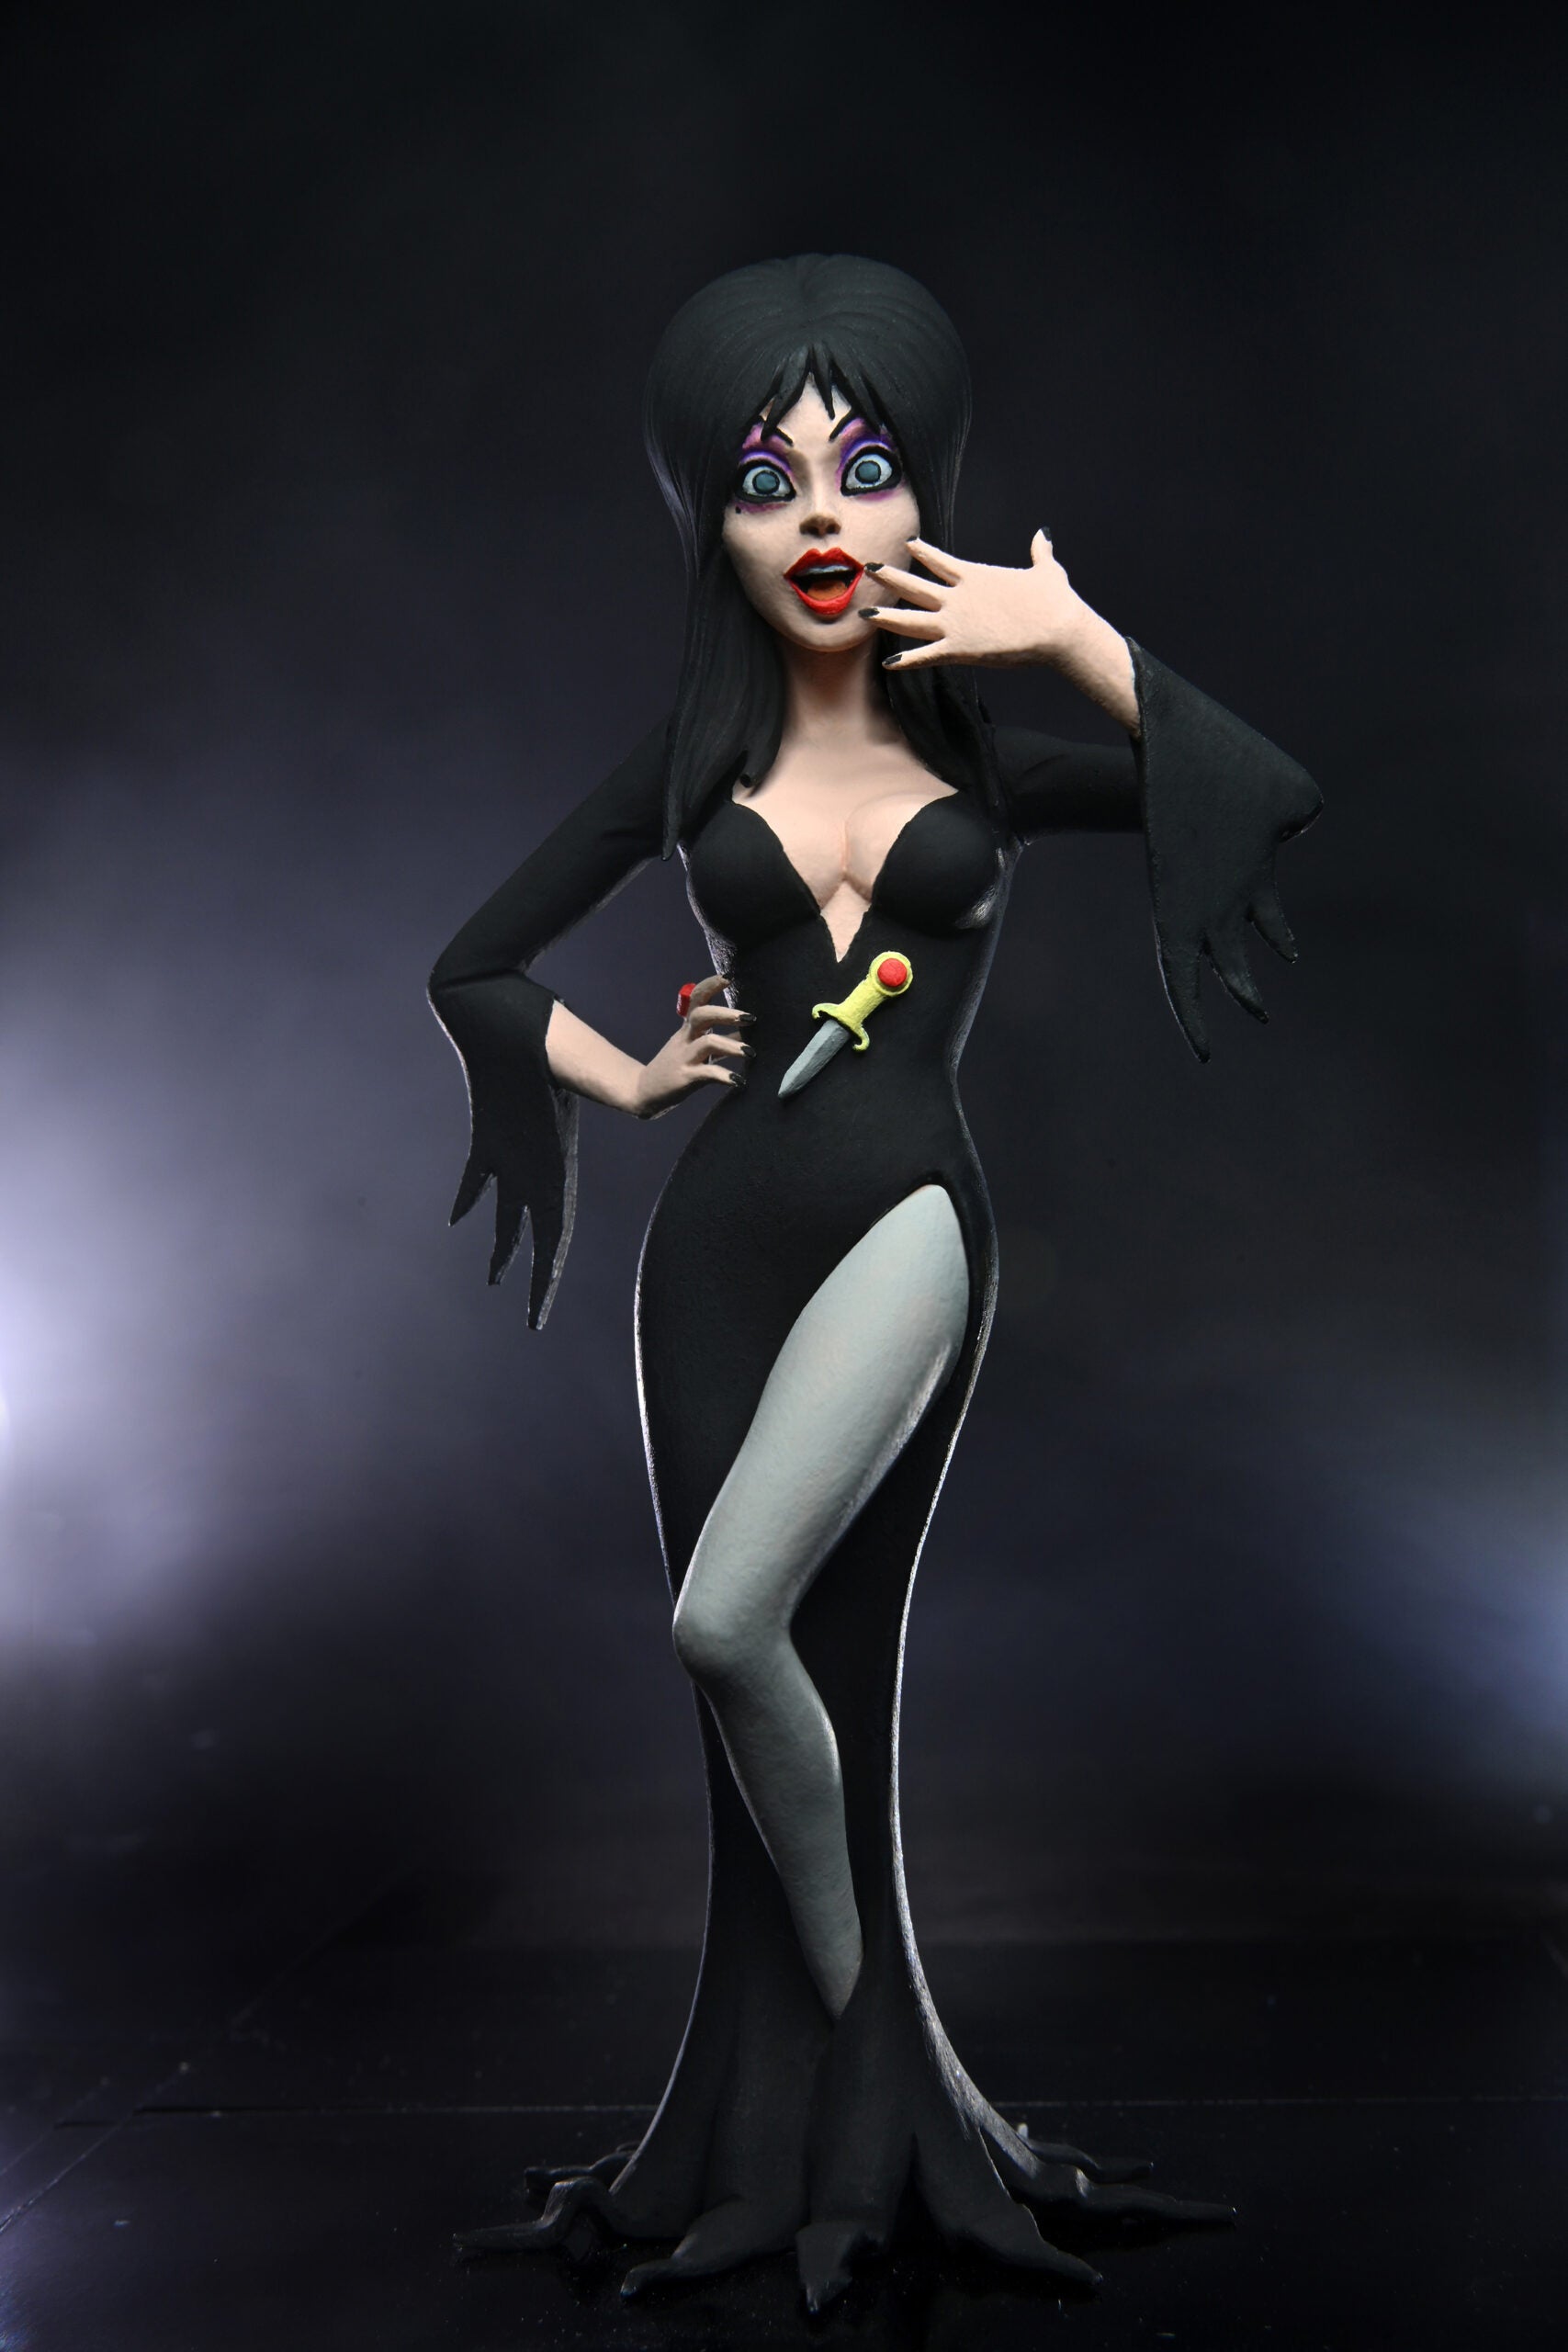 NECA - Toony Terrors Elvira (Mistress of the Dark) 6" Action Figure - Zlc Collectibles